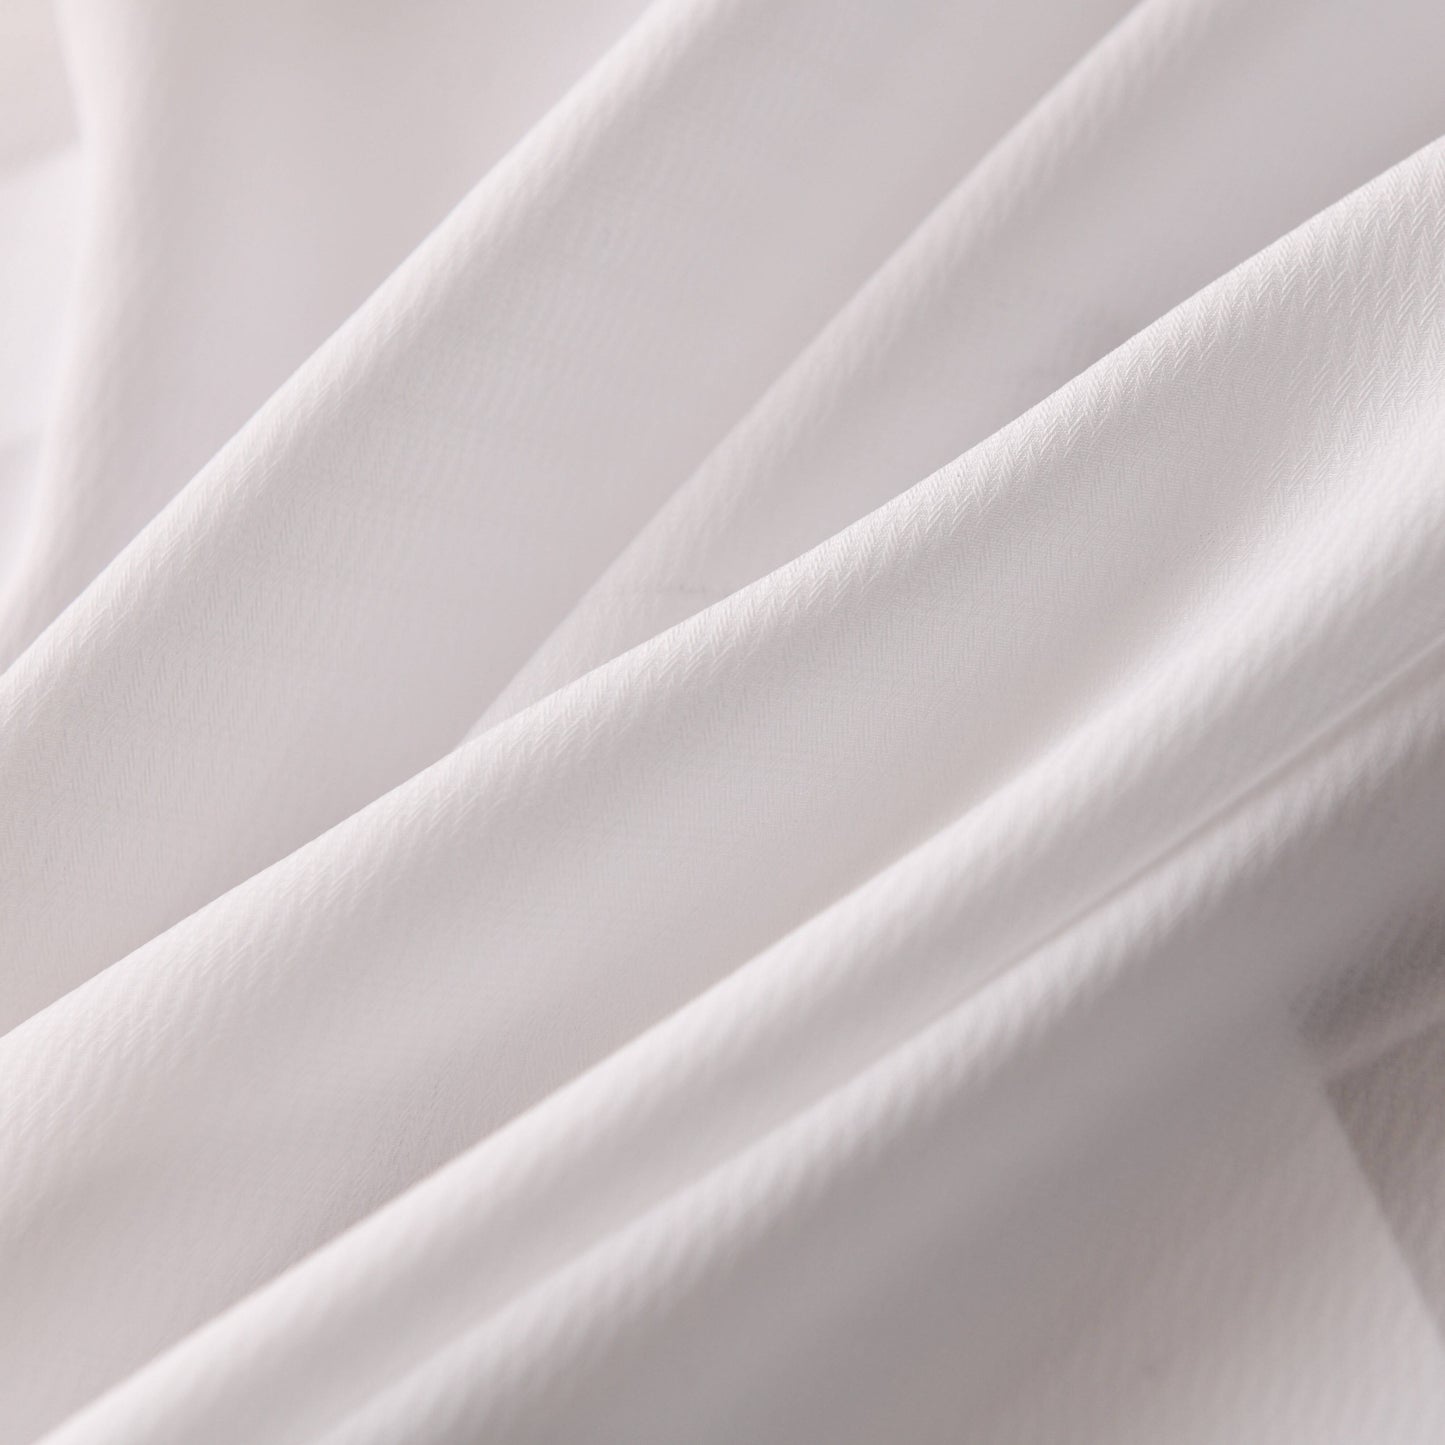 Cloud Privacy Sheer Curtain - semi sheer curtains: Close up detail of dense fabric.